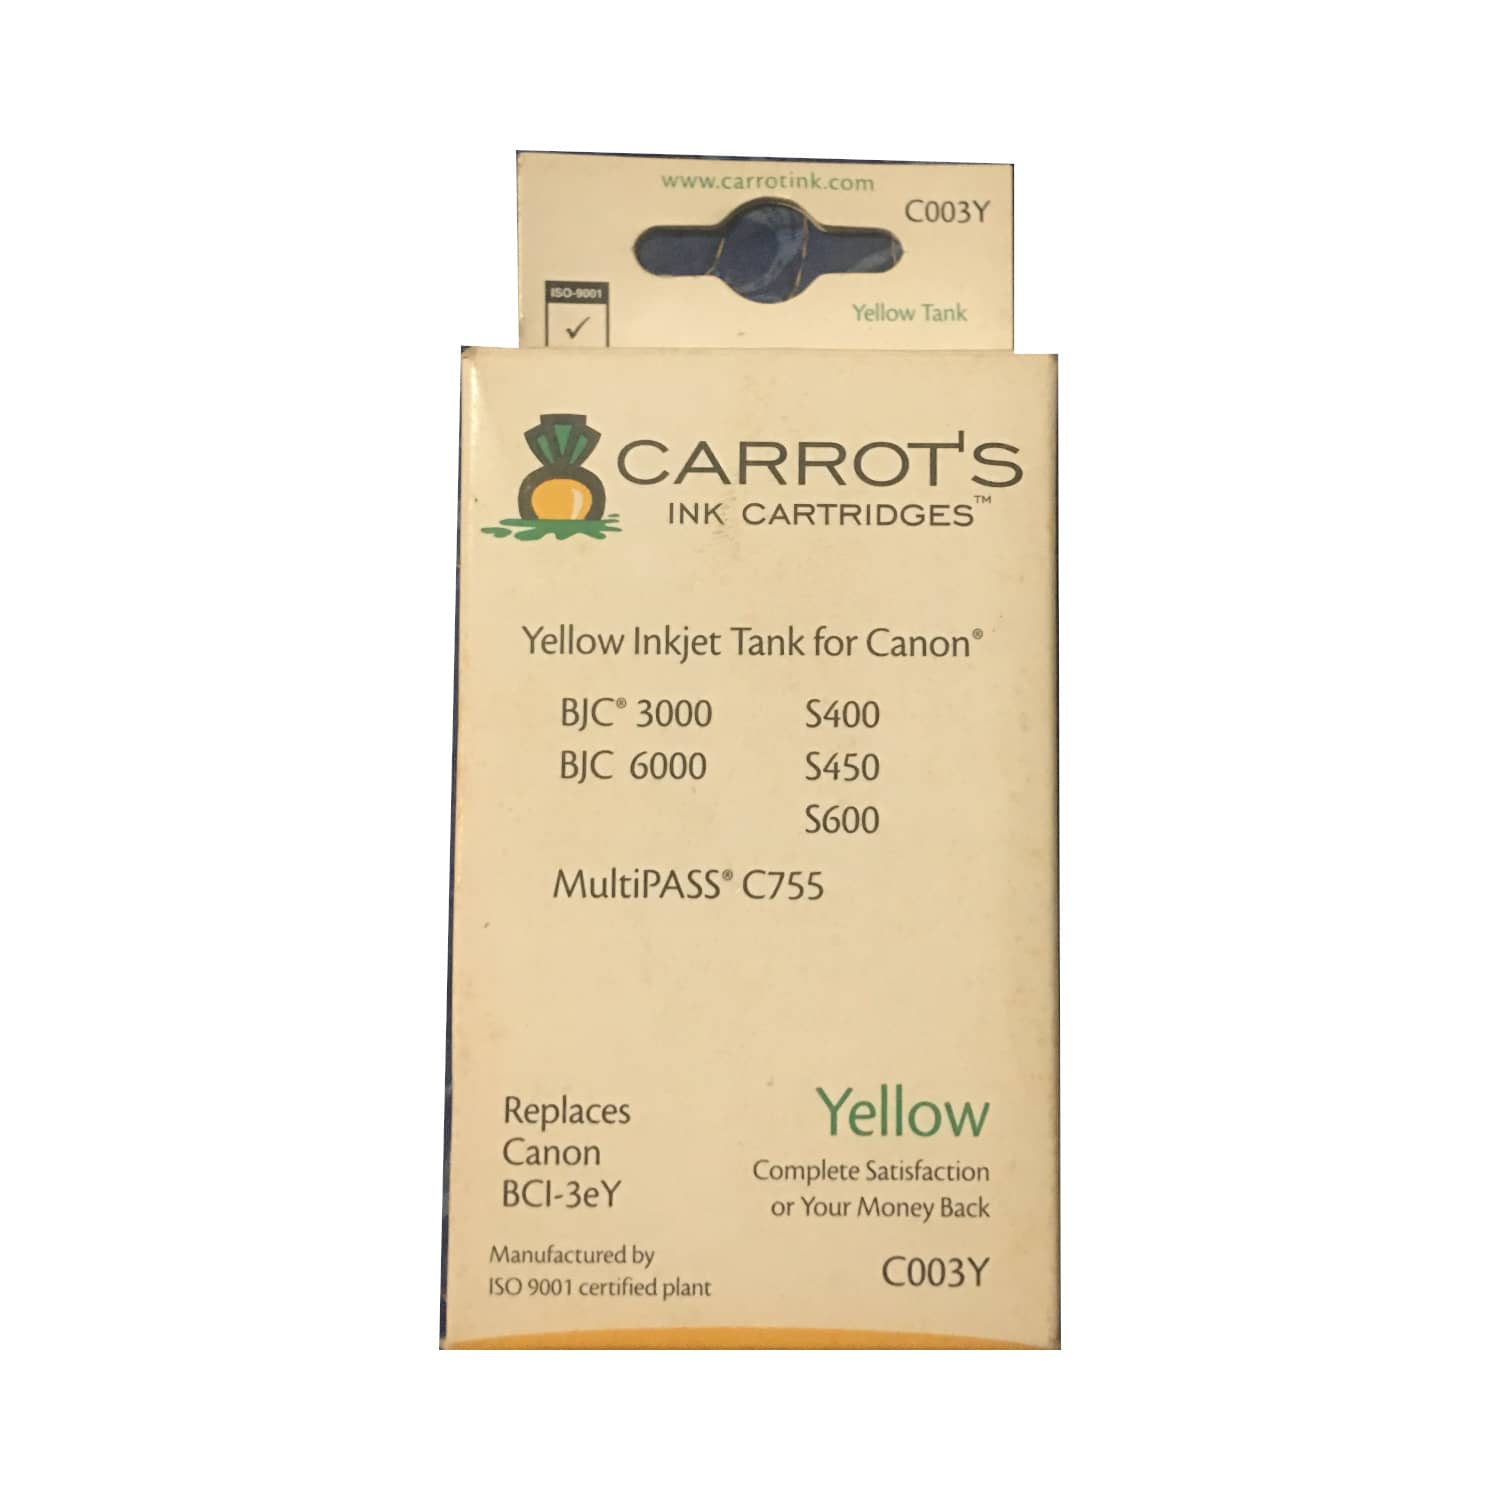 Carrot’s Ink Cartridge Yellow C003Y